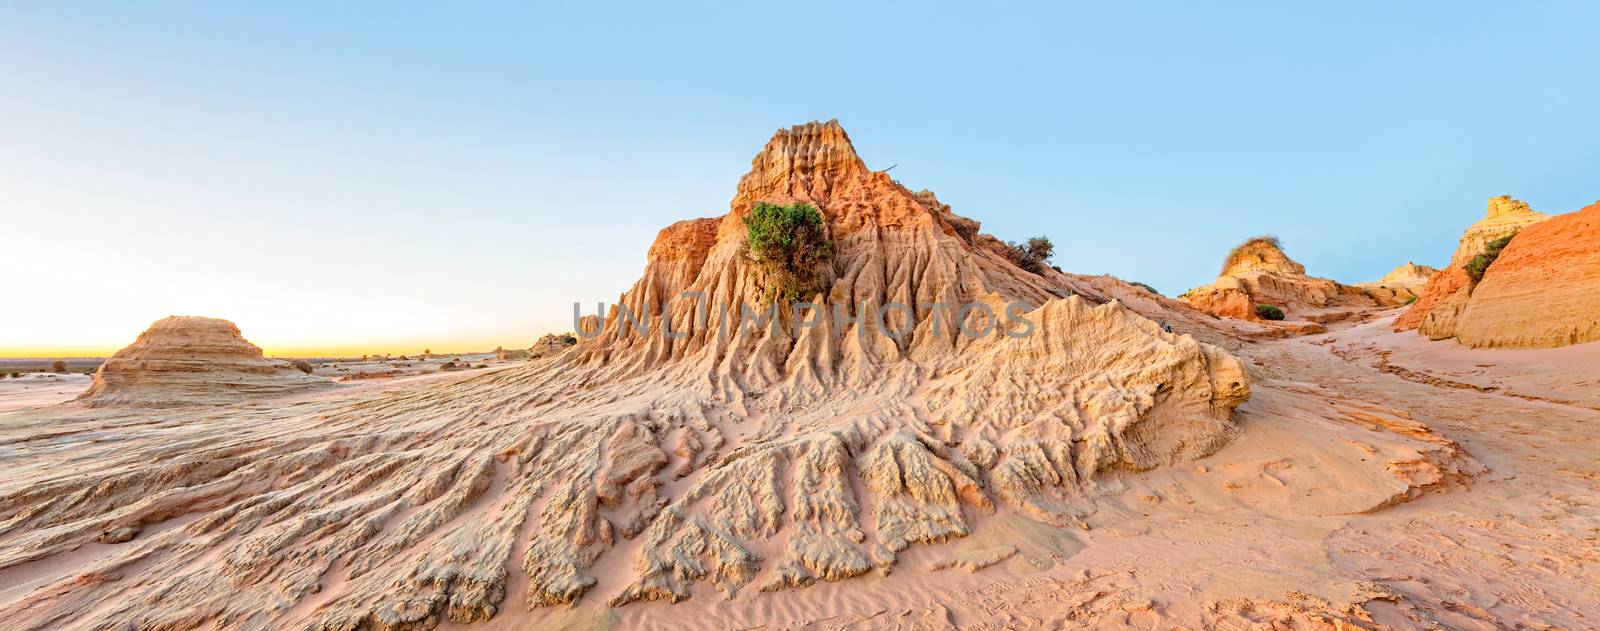 Eroded desert landforms  scenic panorama in outback Australia